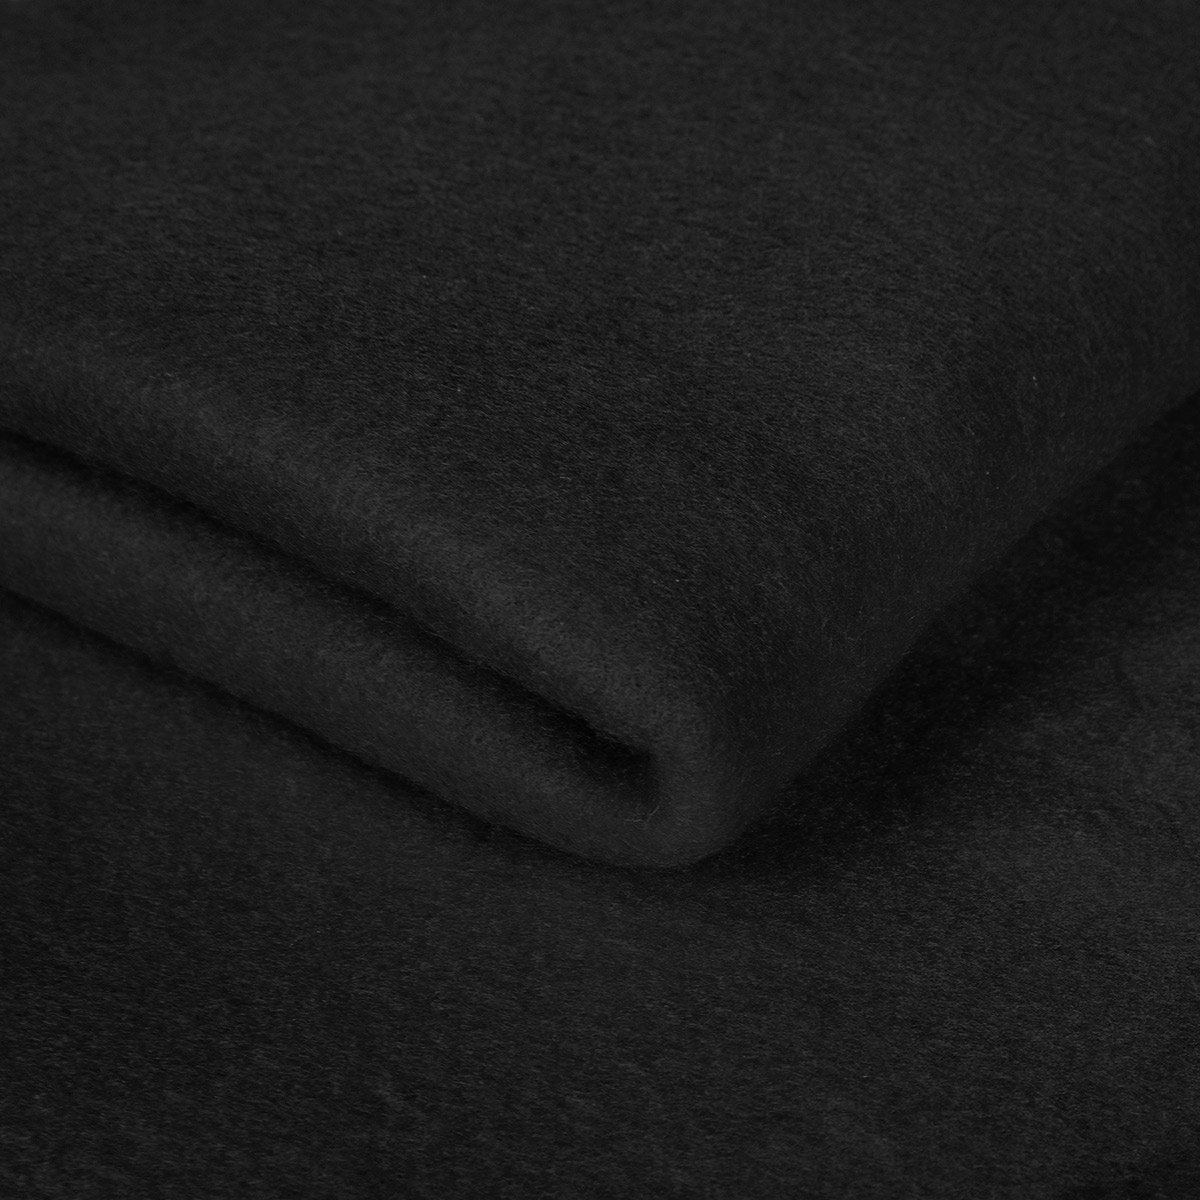 Self Adhesive Felt Fabric for Crafts Black Velvet Fabric Roll Soft